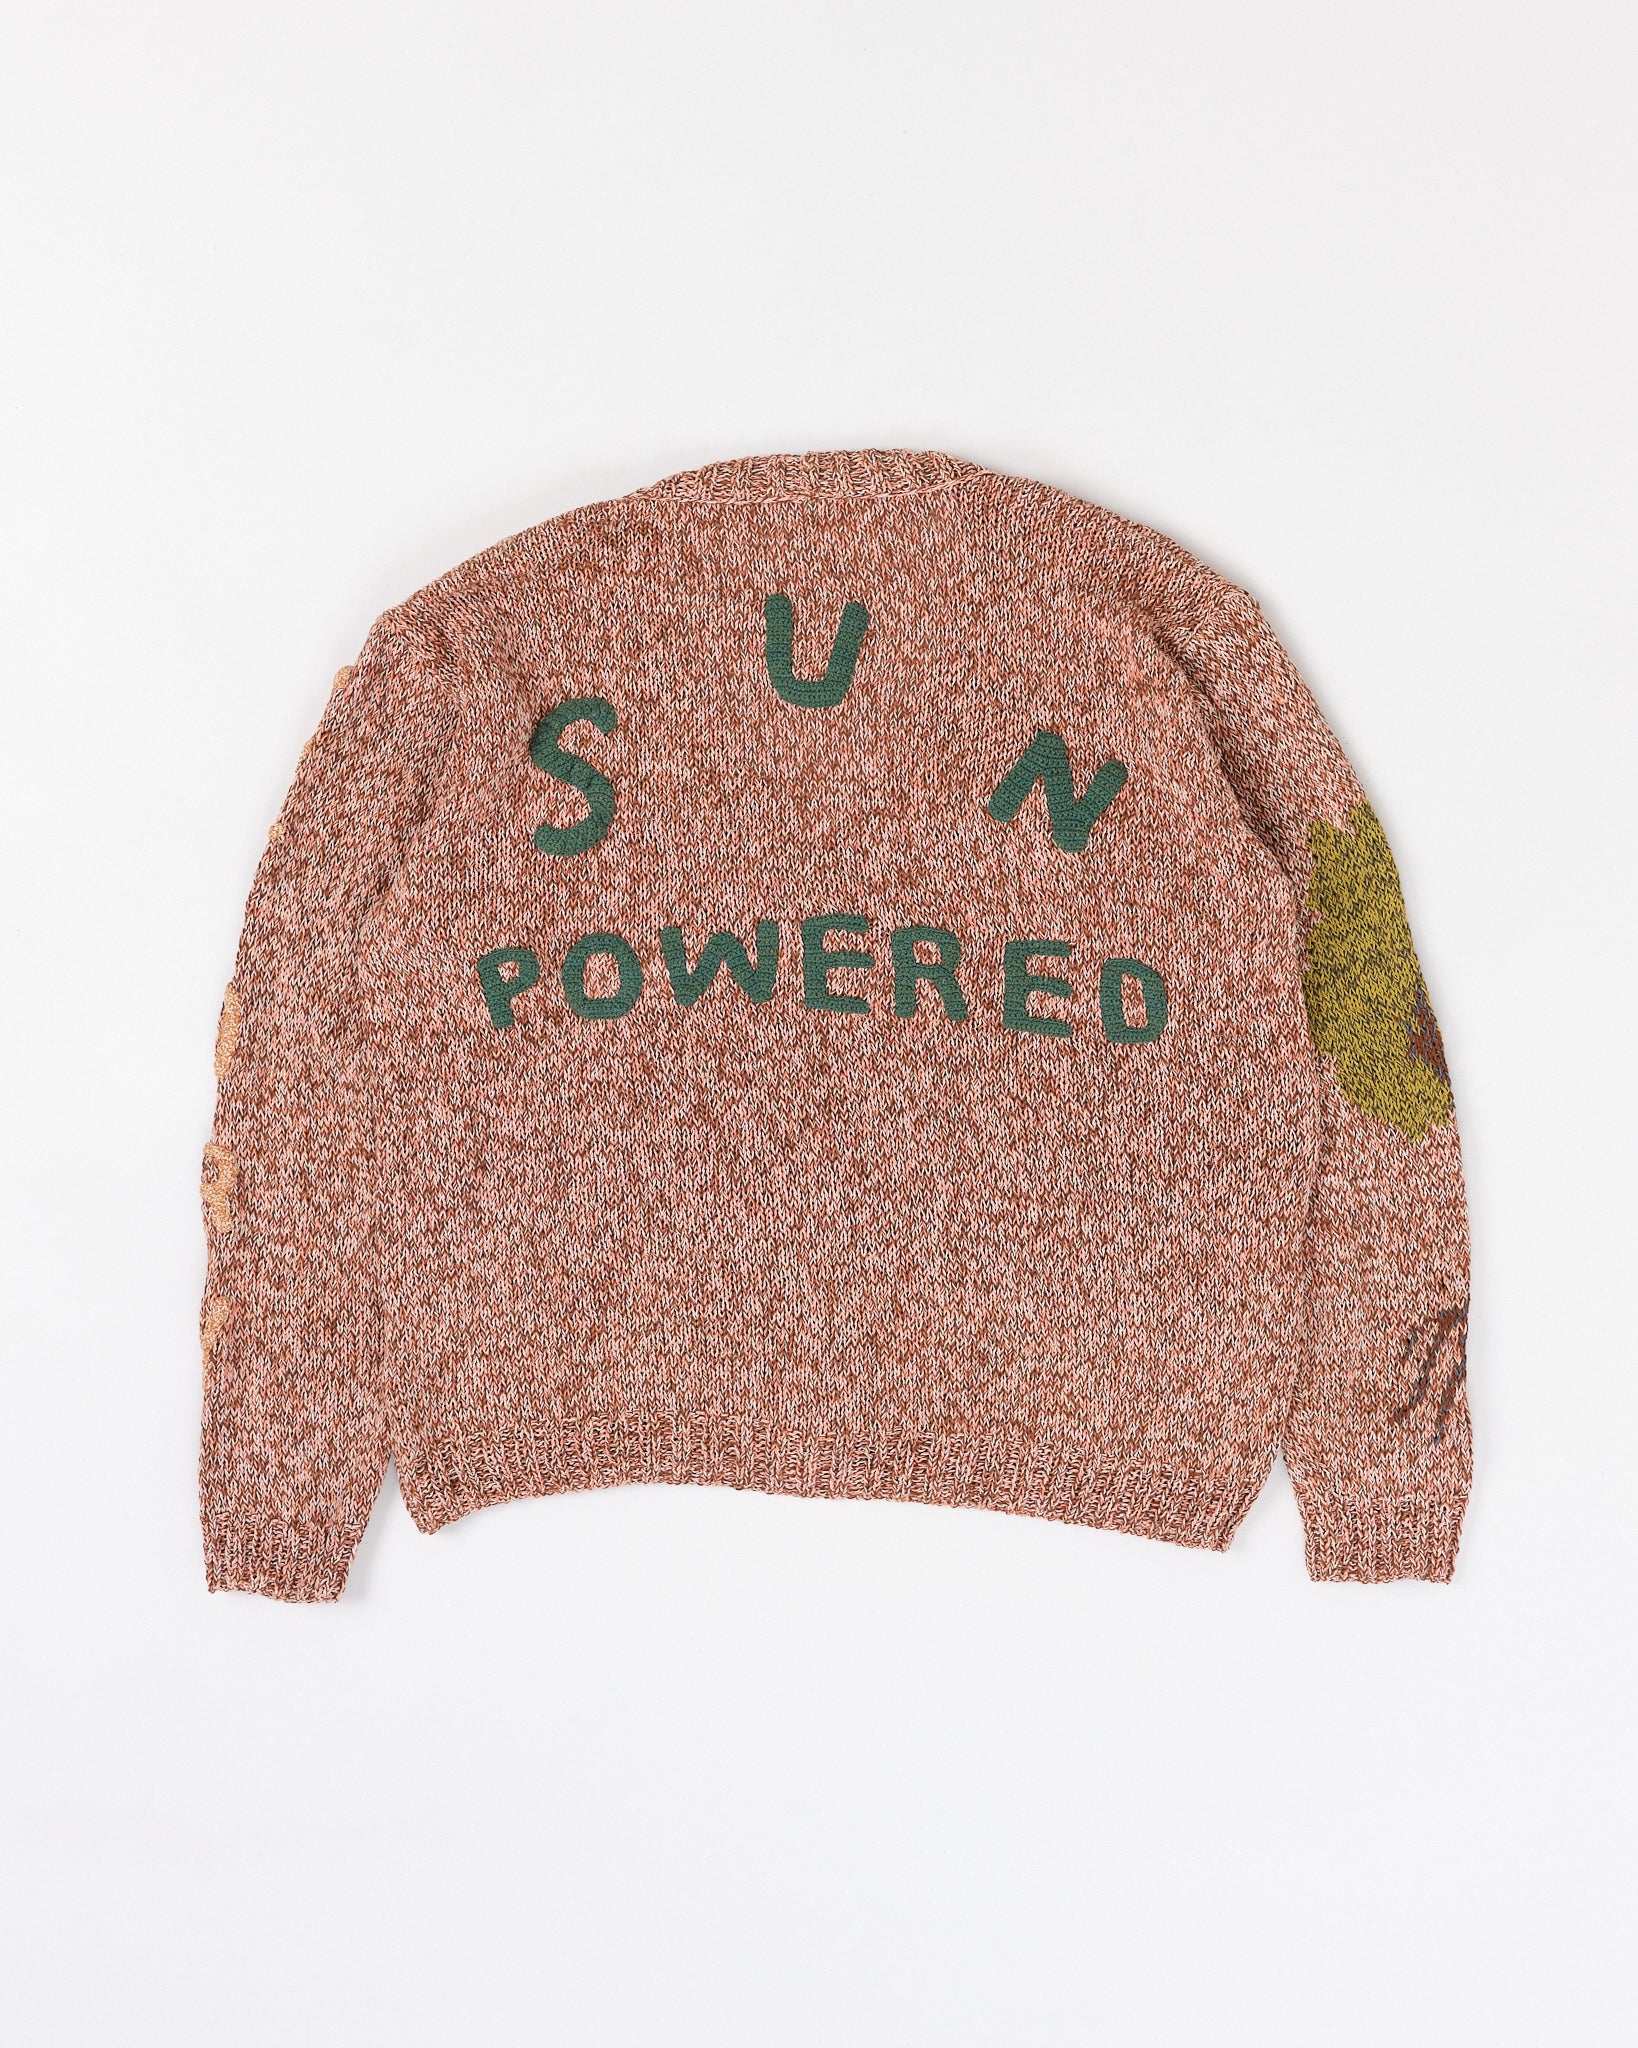 Twinsun Knit Cardigan - Twisted Pink Sun Powered